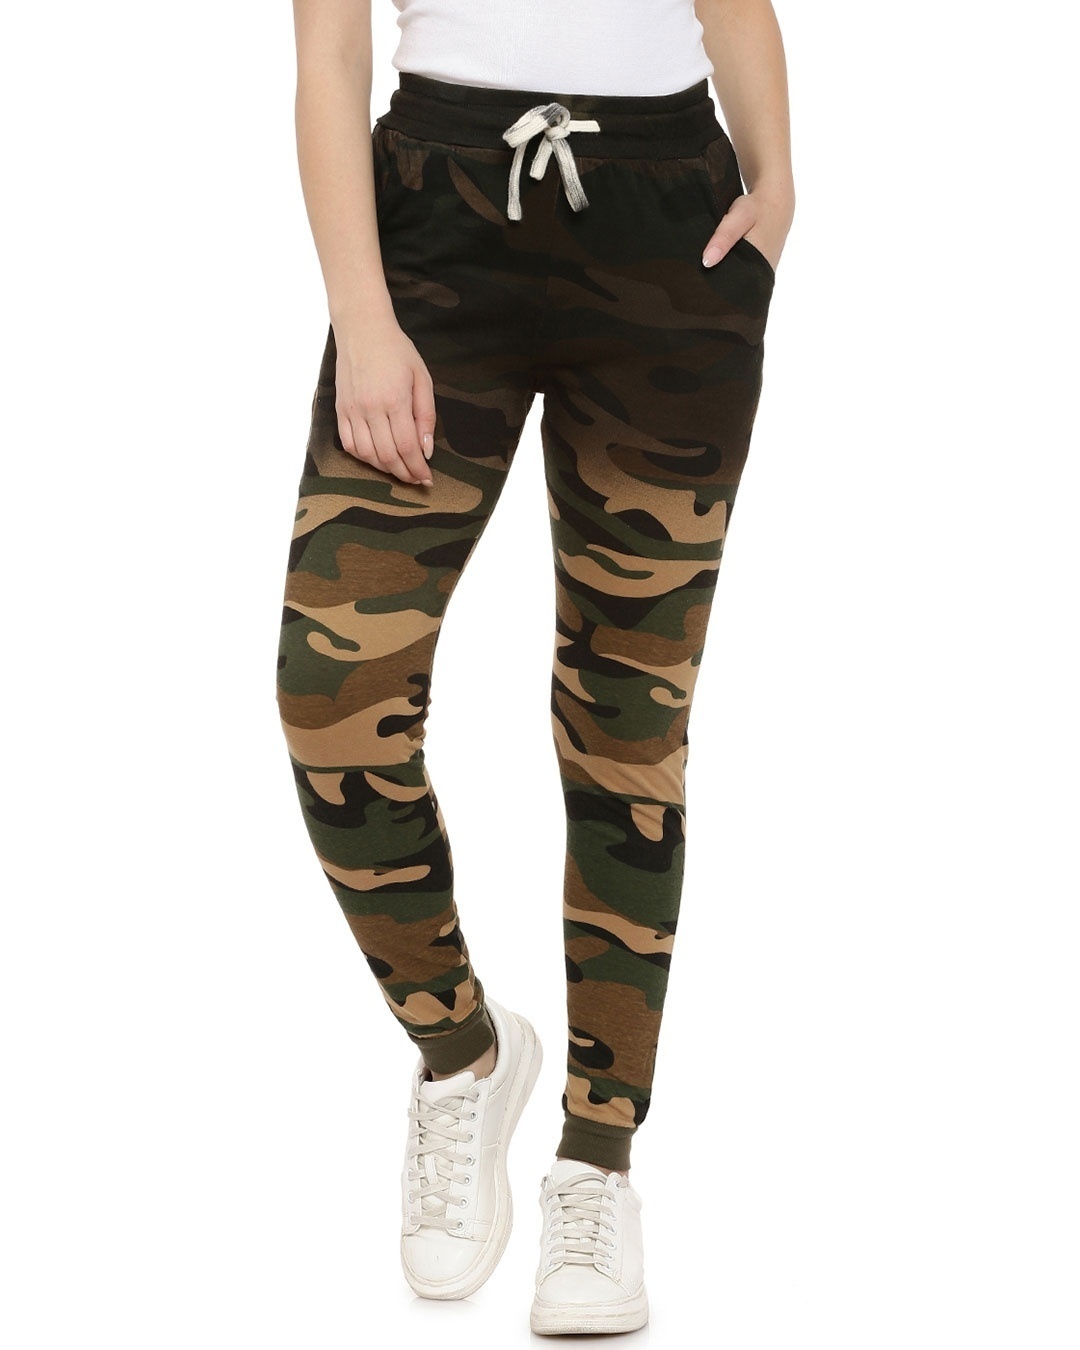 Buy PROLINE Mens 3 Pocket Camouflage Track Pants  Shoppers Stop